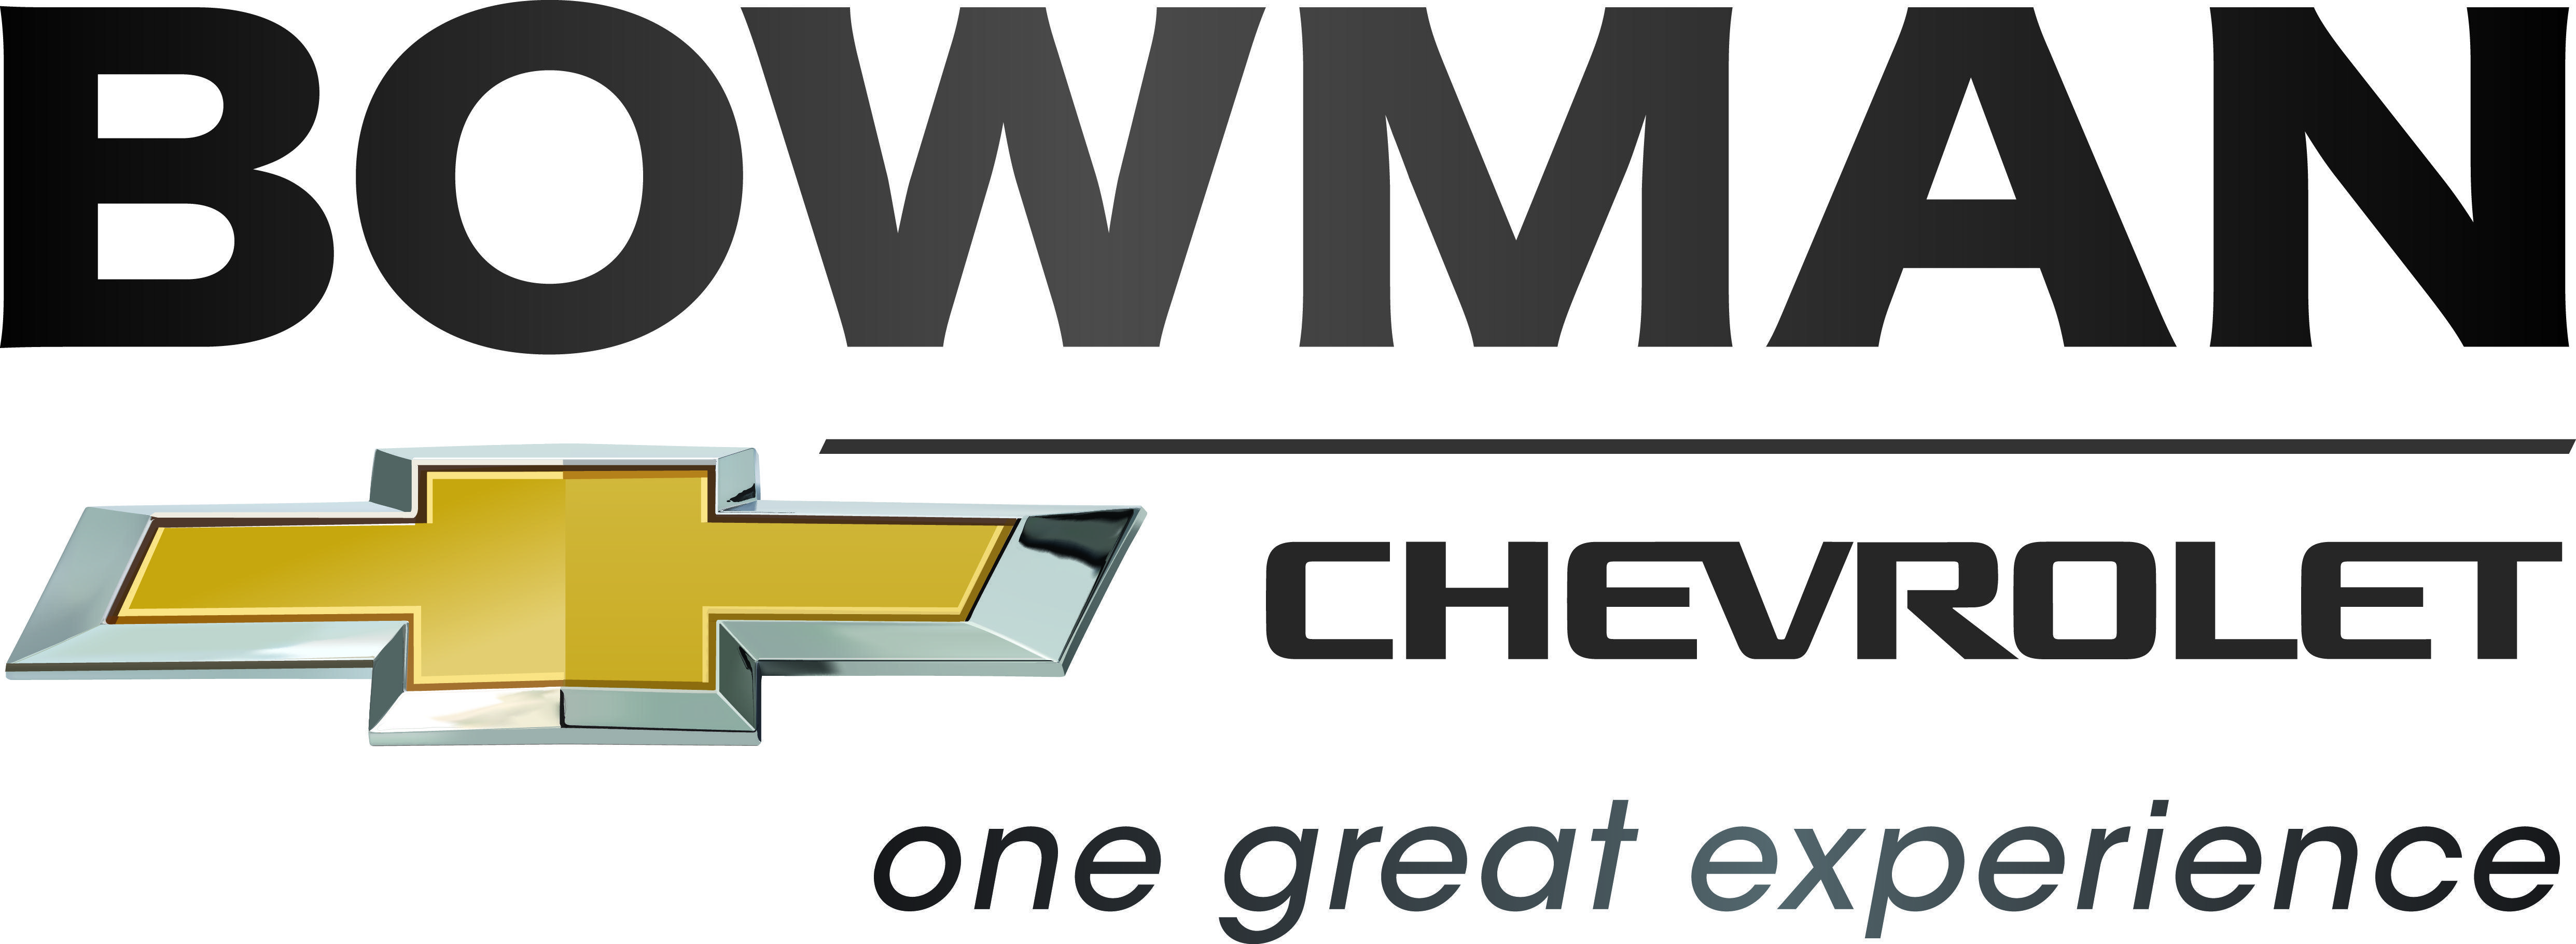 Chevrolet Malibu Logo - Clarkston - 2018 Chevrolet Malibu Vehicles for Sale